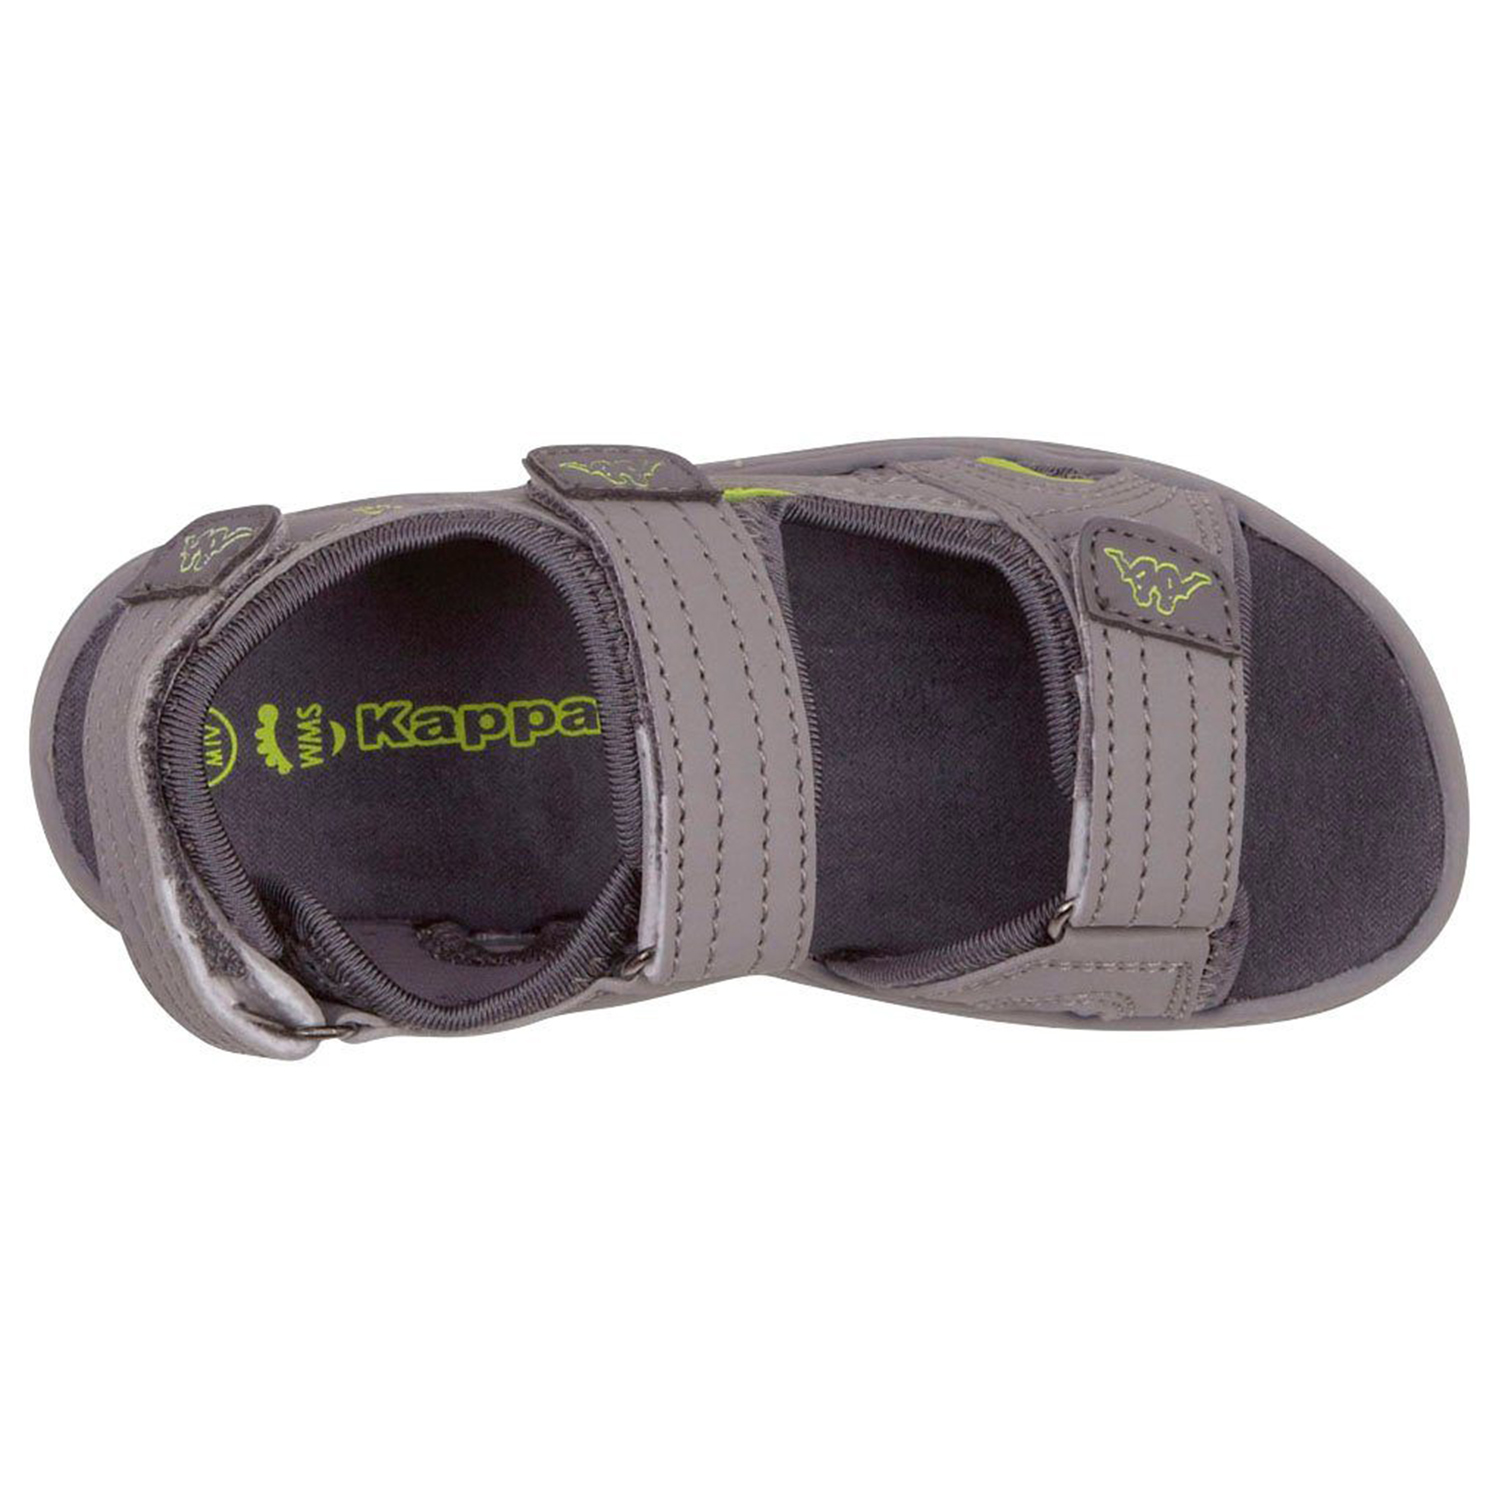 Kappa Unisex Kinder Sandale Schuhe 260373 grau